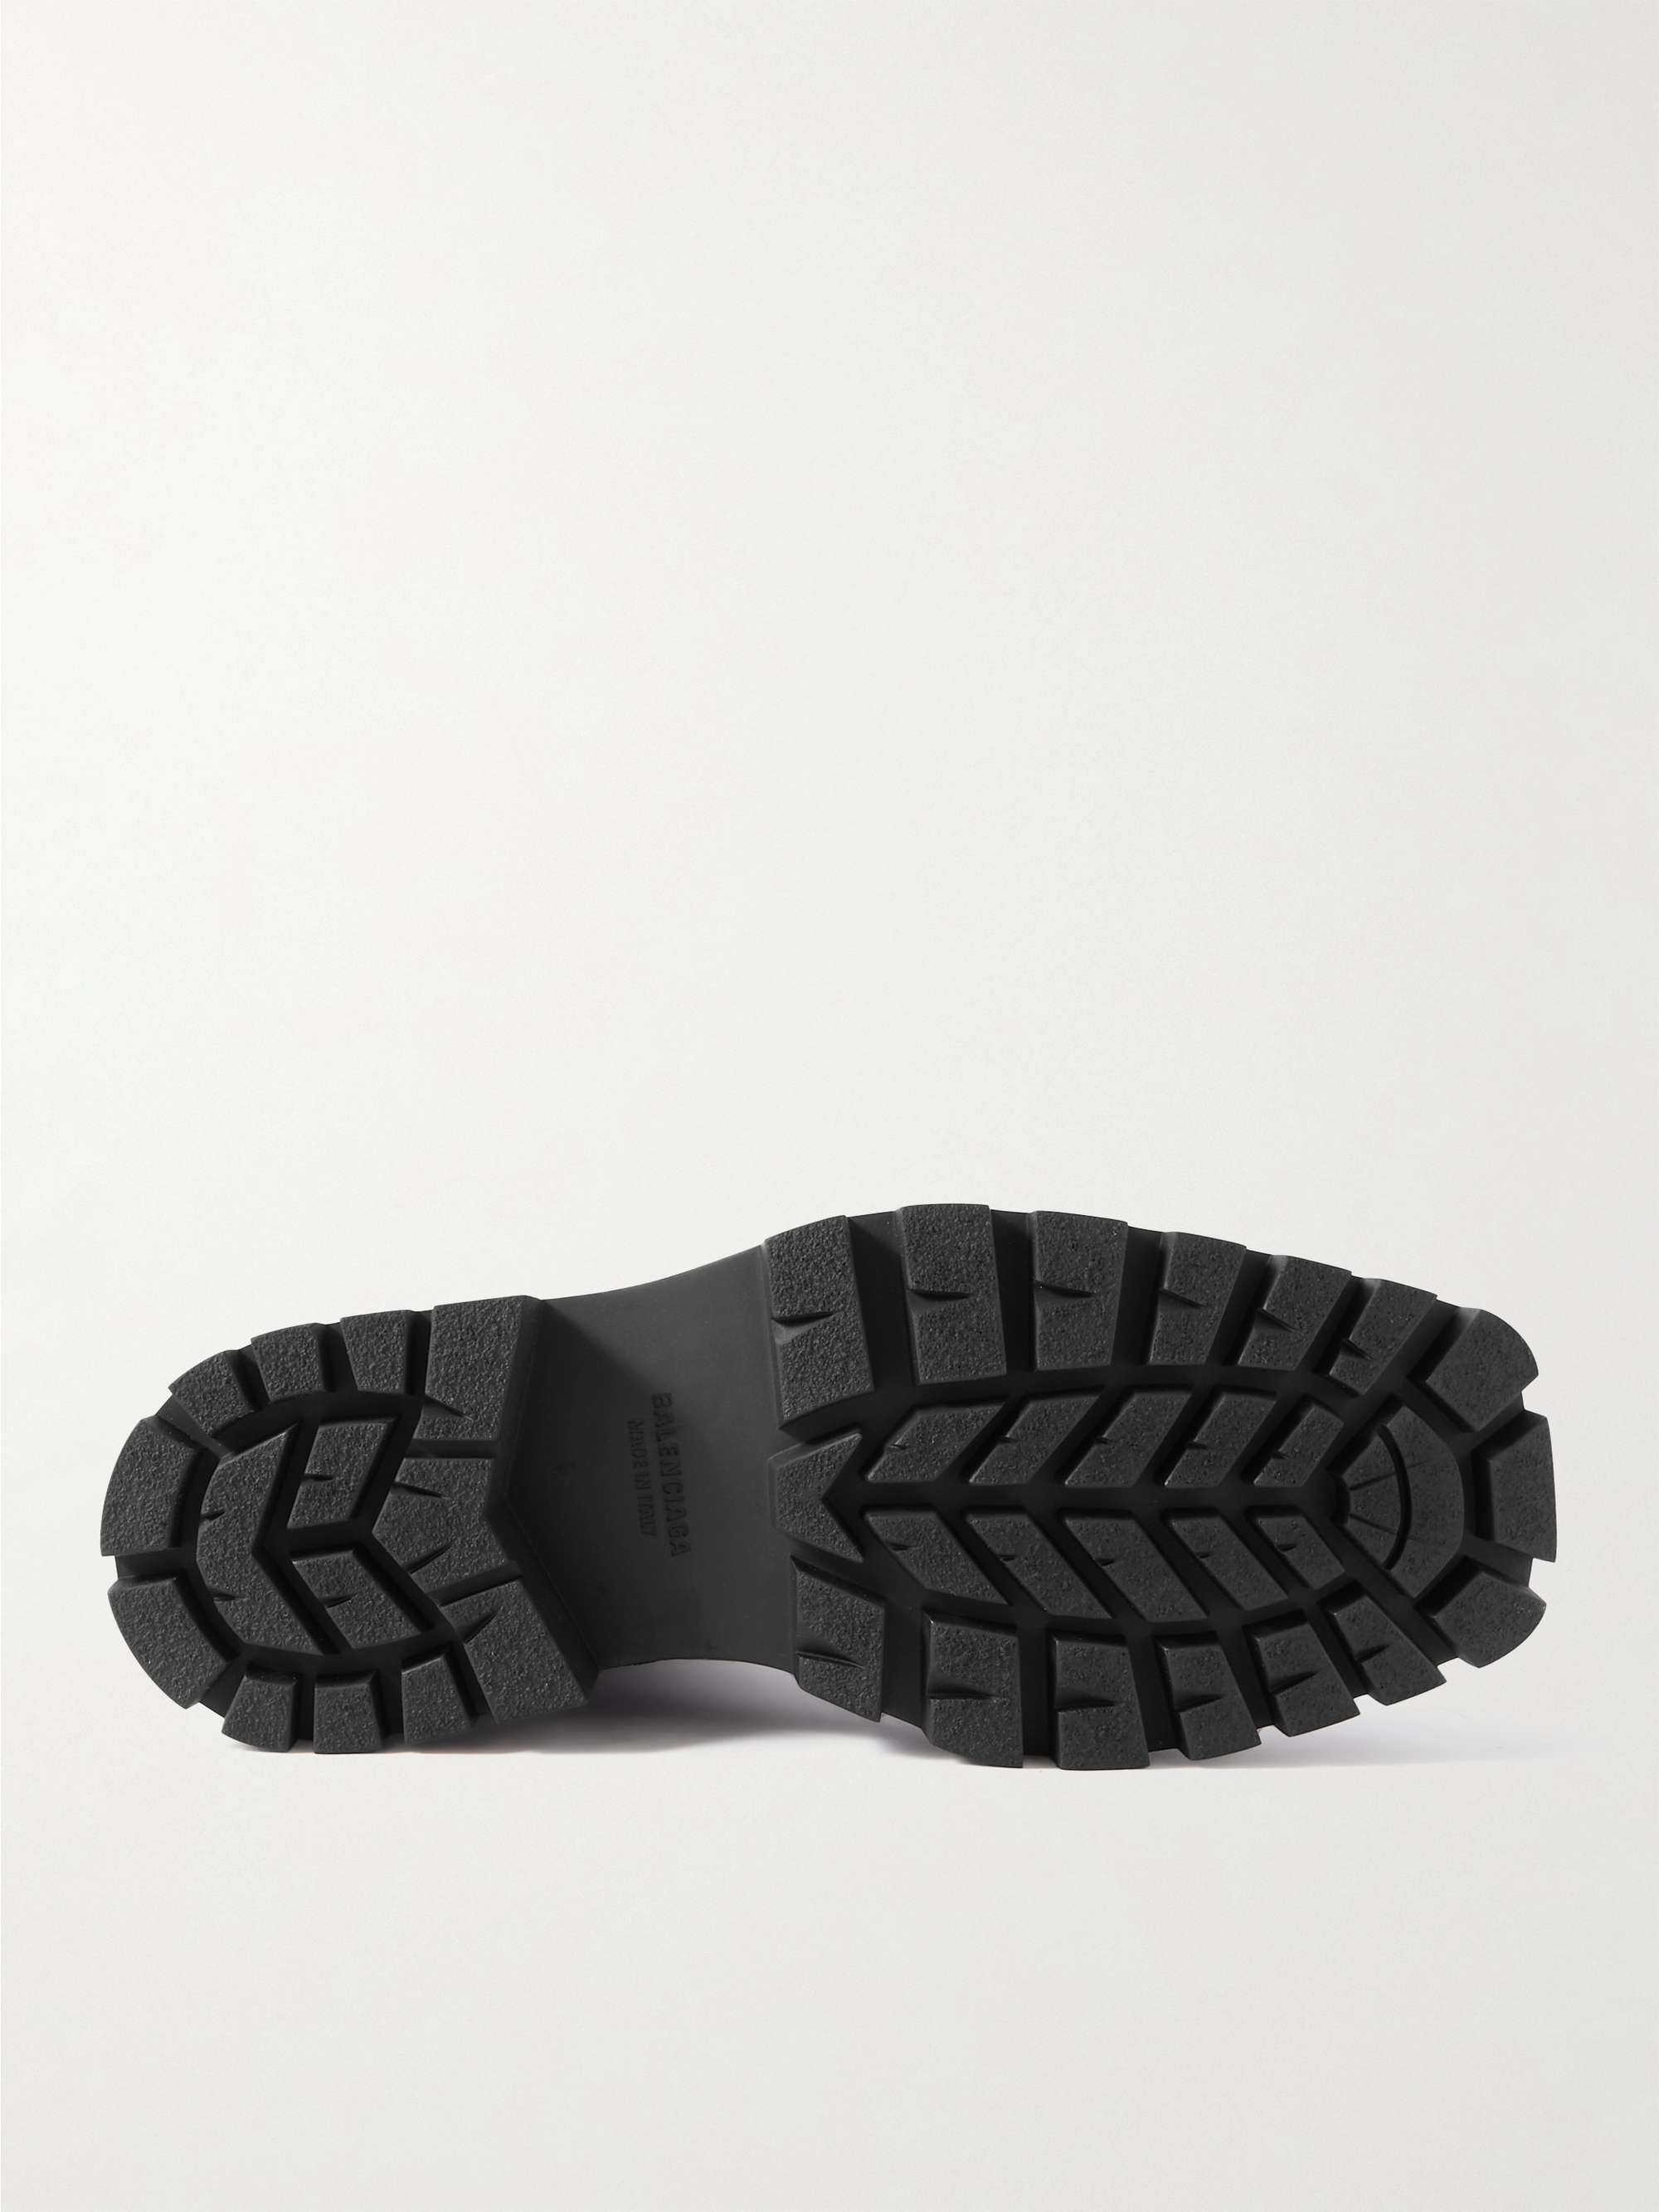 BALENCIAGA Rhino Leather Boots for Men | MR PORTER